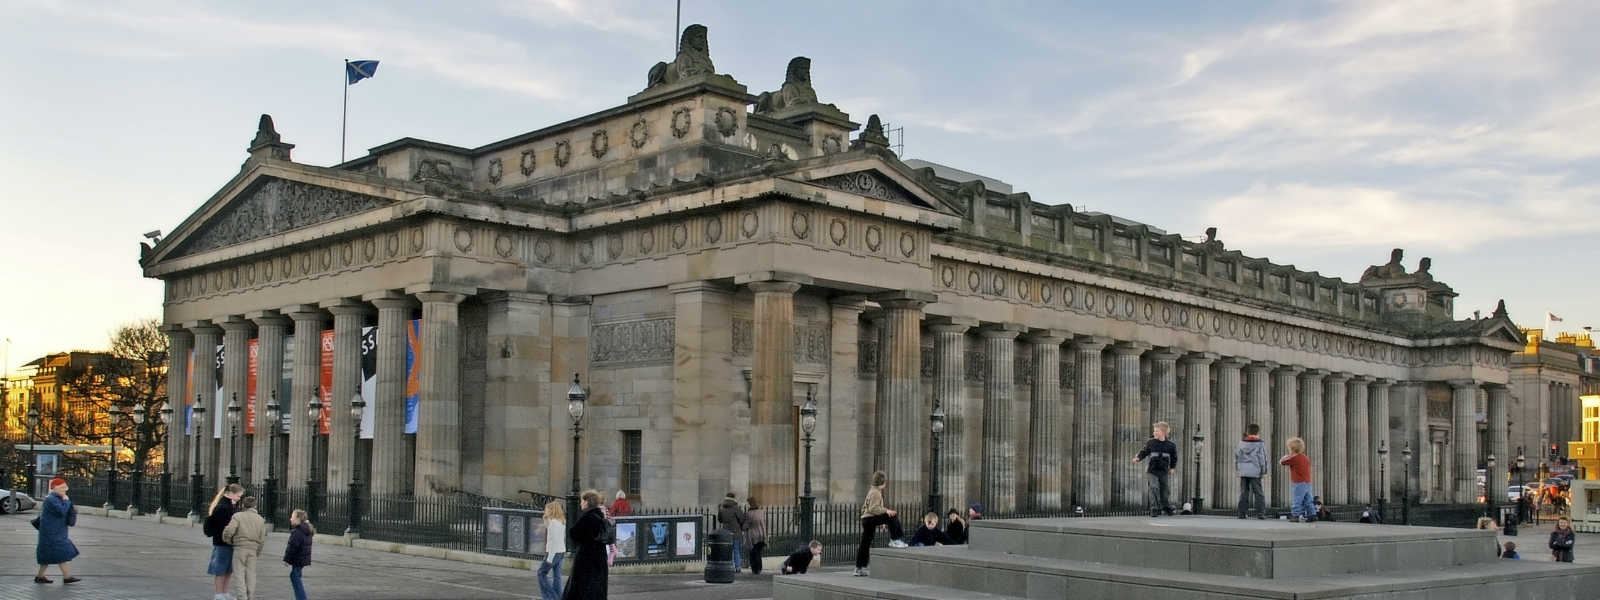 National Gallery Of Scotland Edinburgh | Parliament House ...